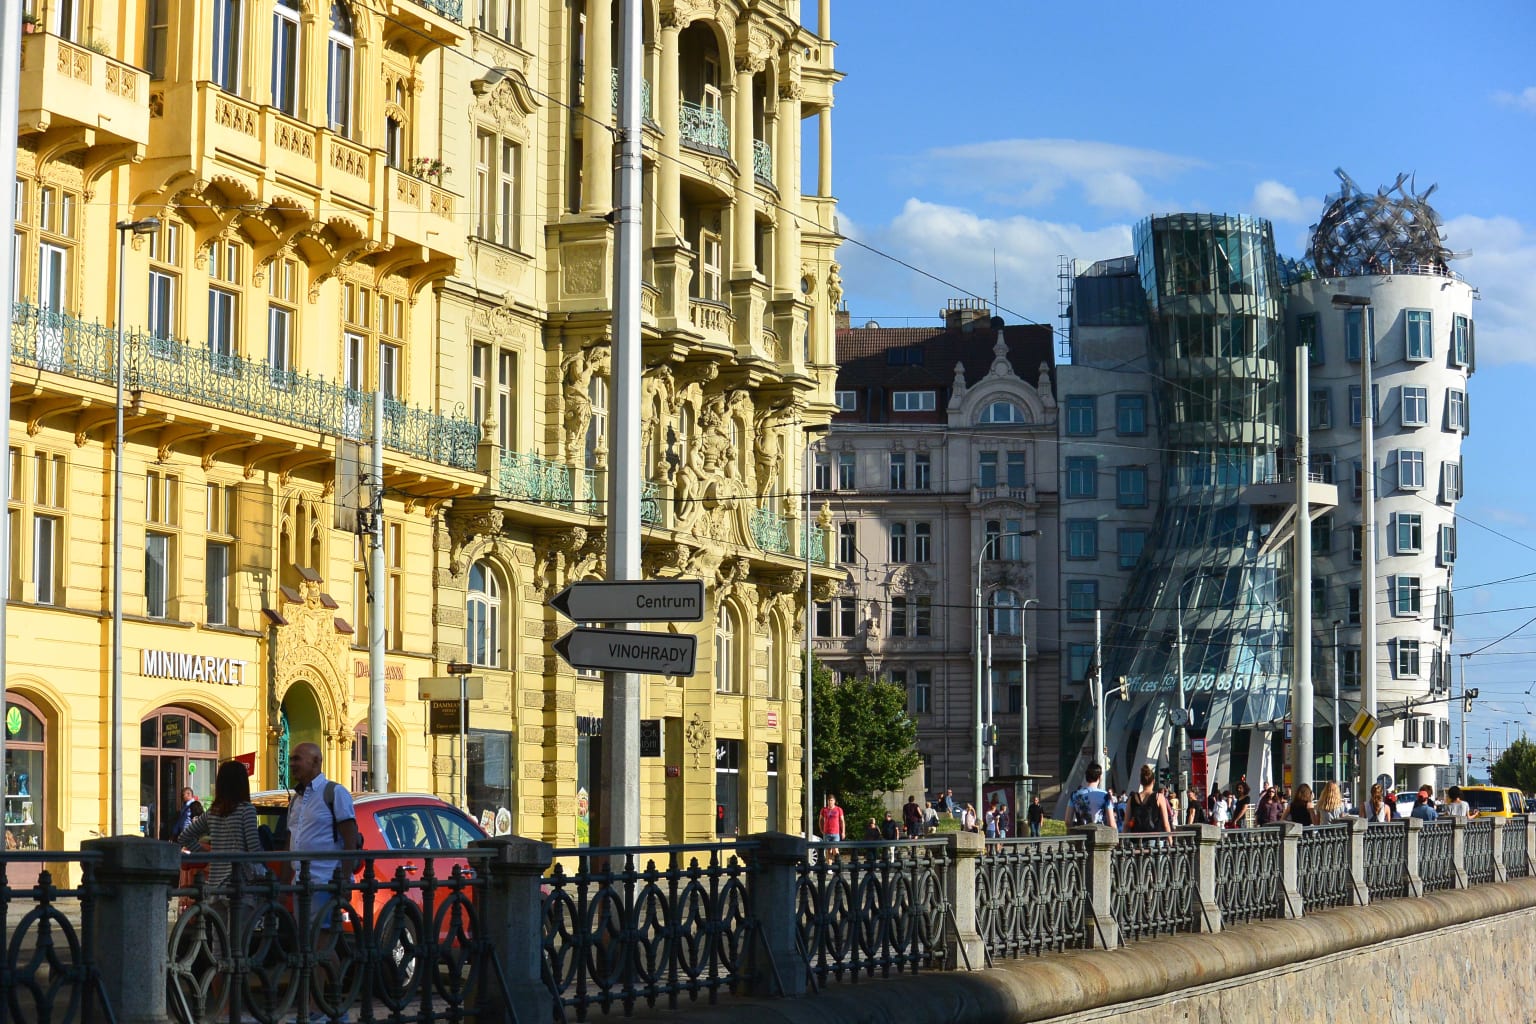 Buildings on the streets of Prague, Czech Republic.